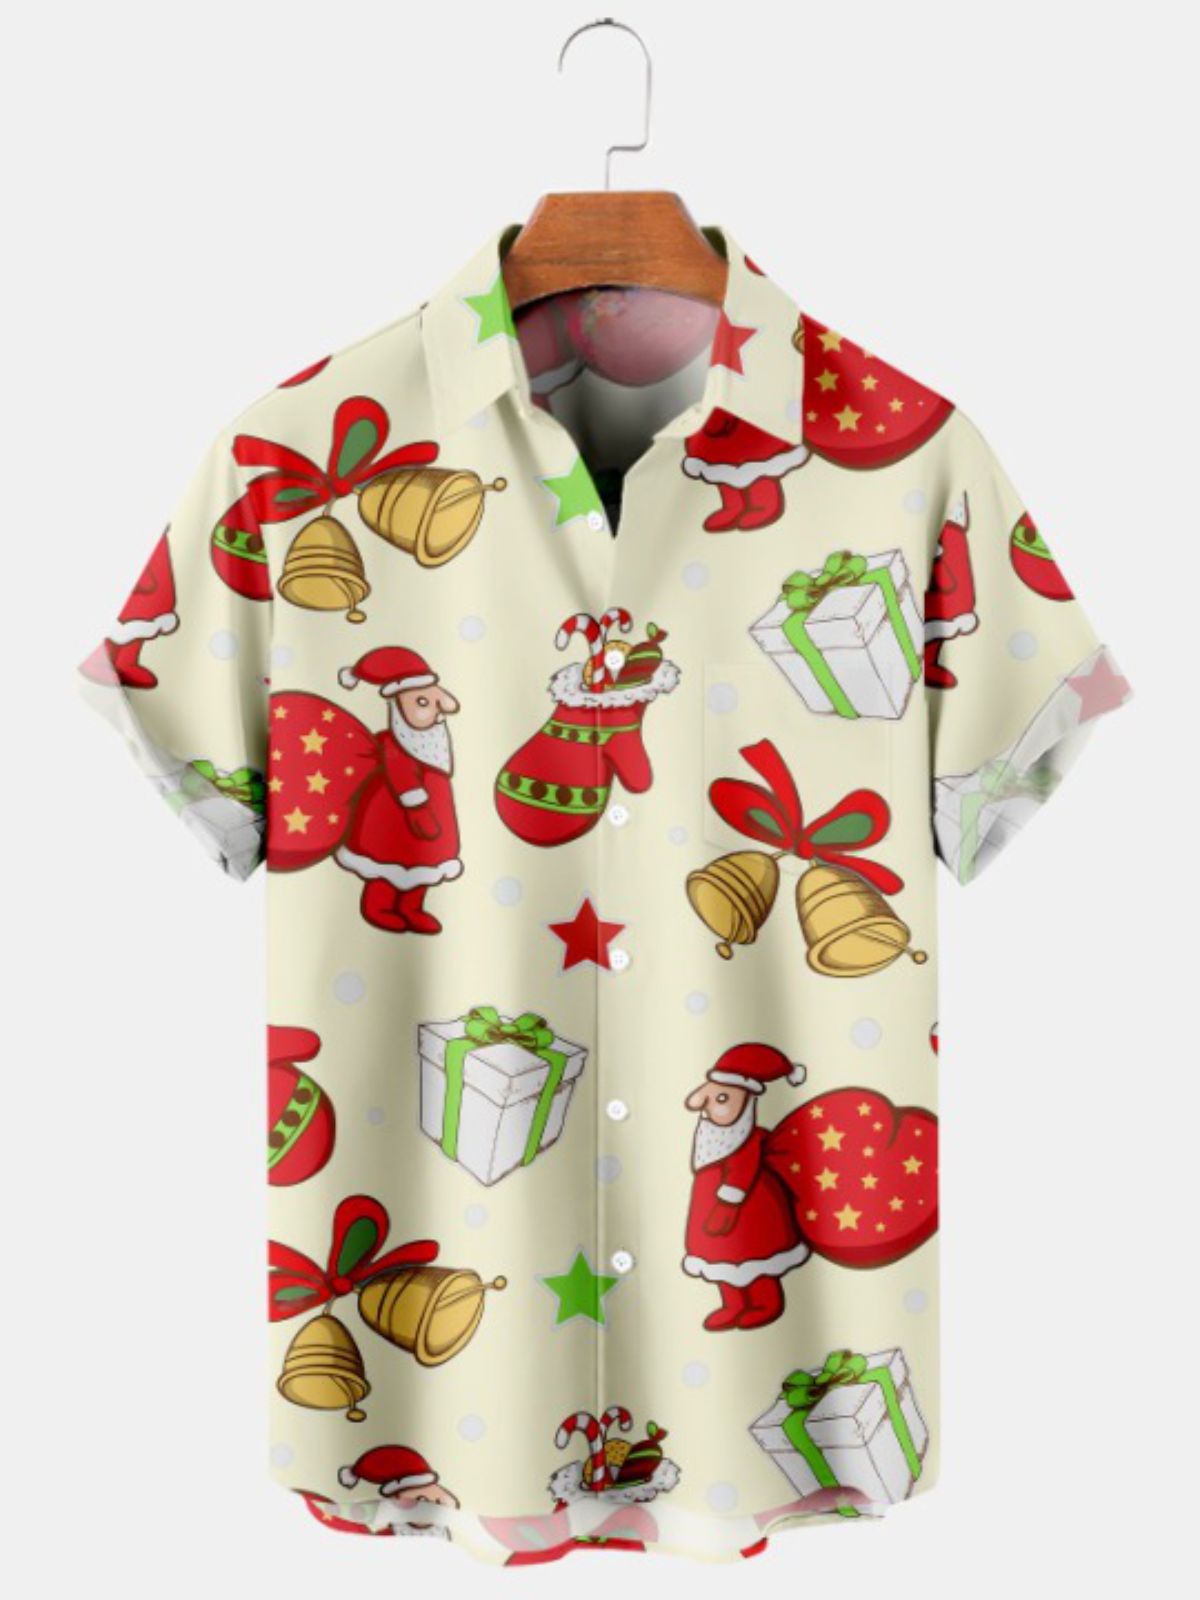 Joyful Bell And Elf Print Christmas Shirt